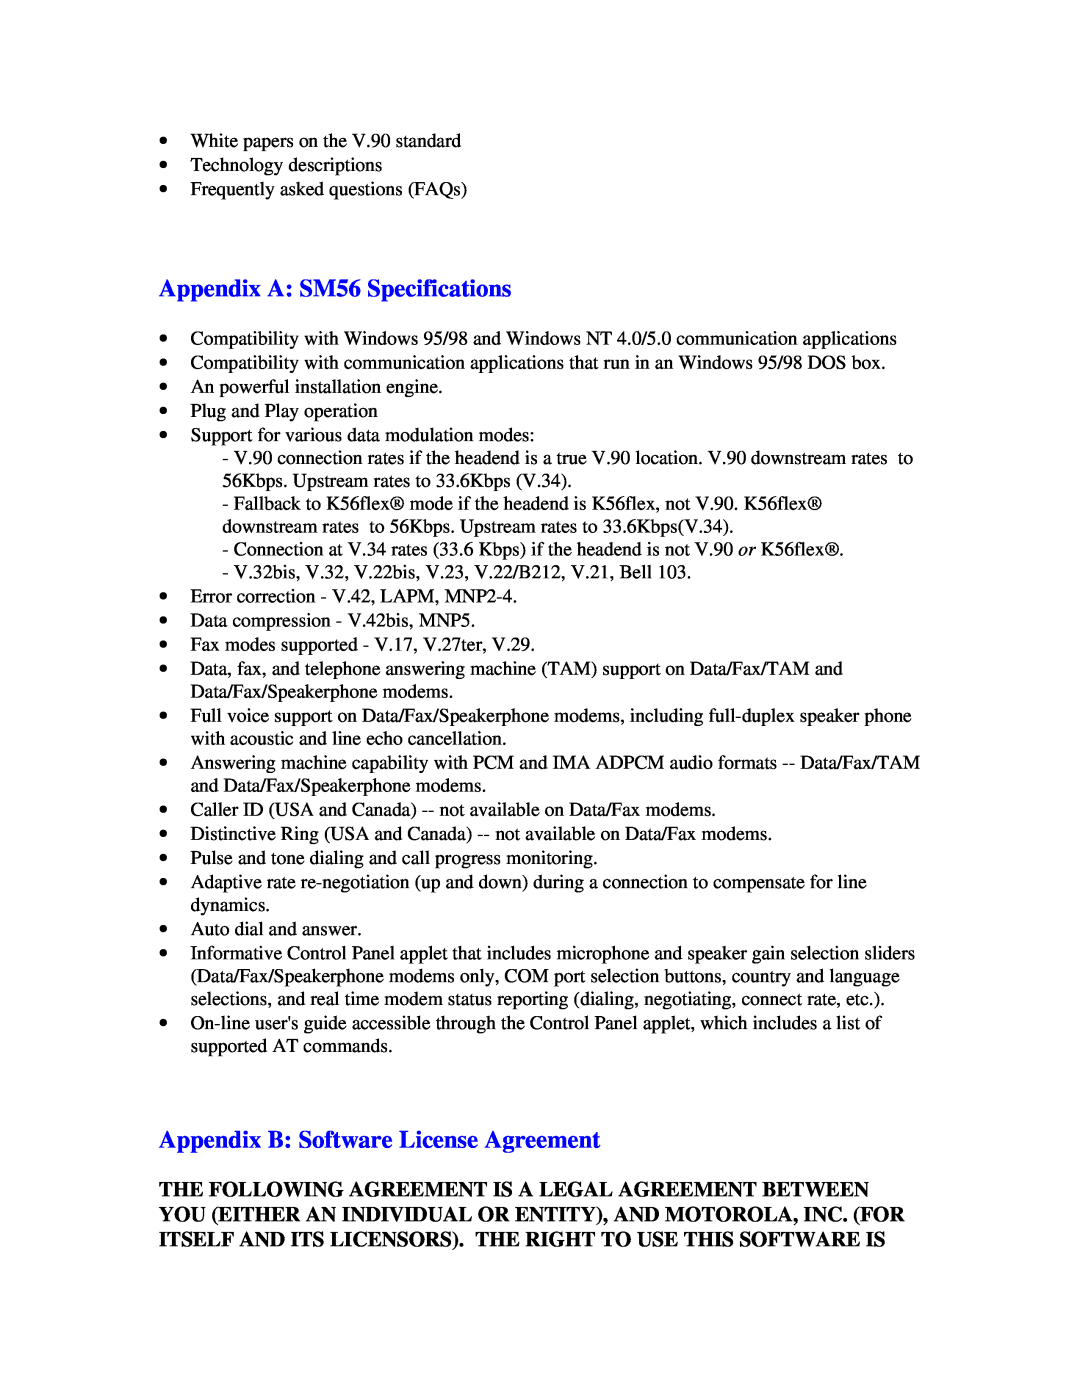 Motorola quick start Appendix A SM56 Specifications, Appendix B Software License Agreement 